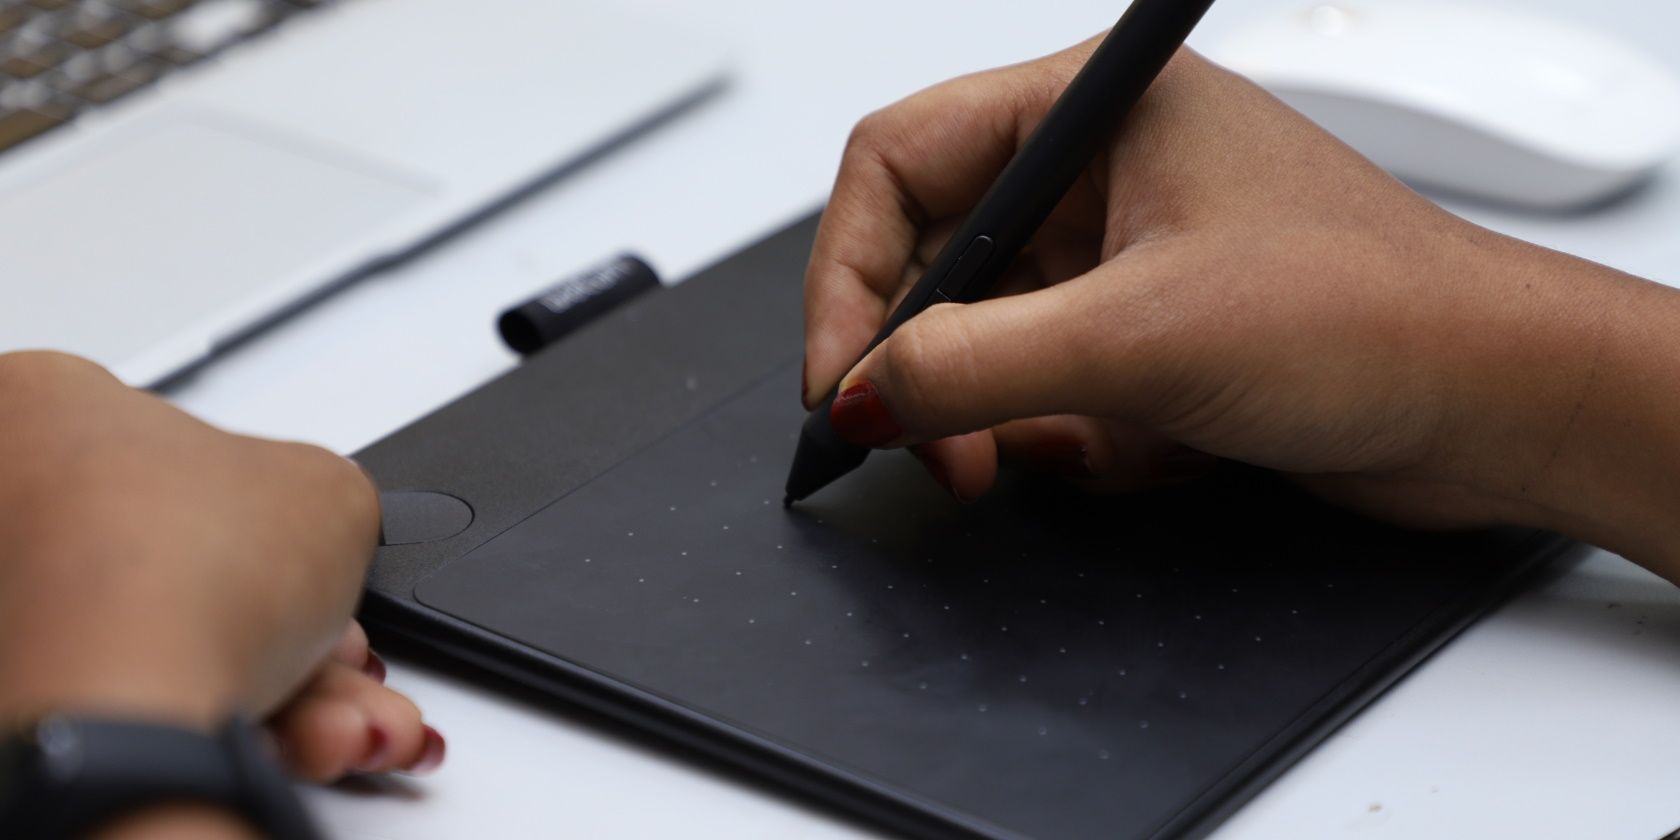 XP-PEN Deco03 Award Winning Wireless Graphics Drawing Tablet Pen Tablet,  8192 Levels of Pressure Sensitivity,